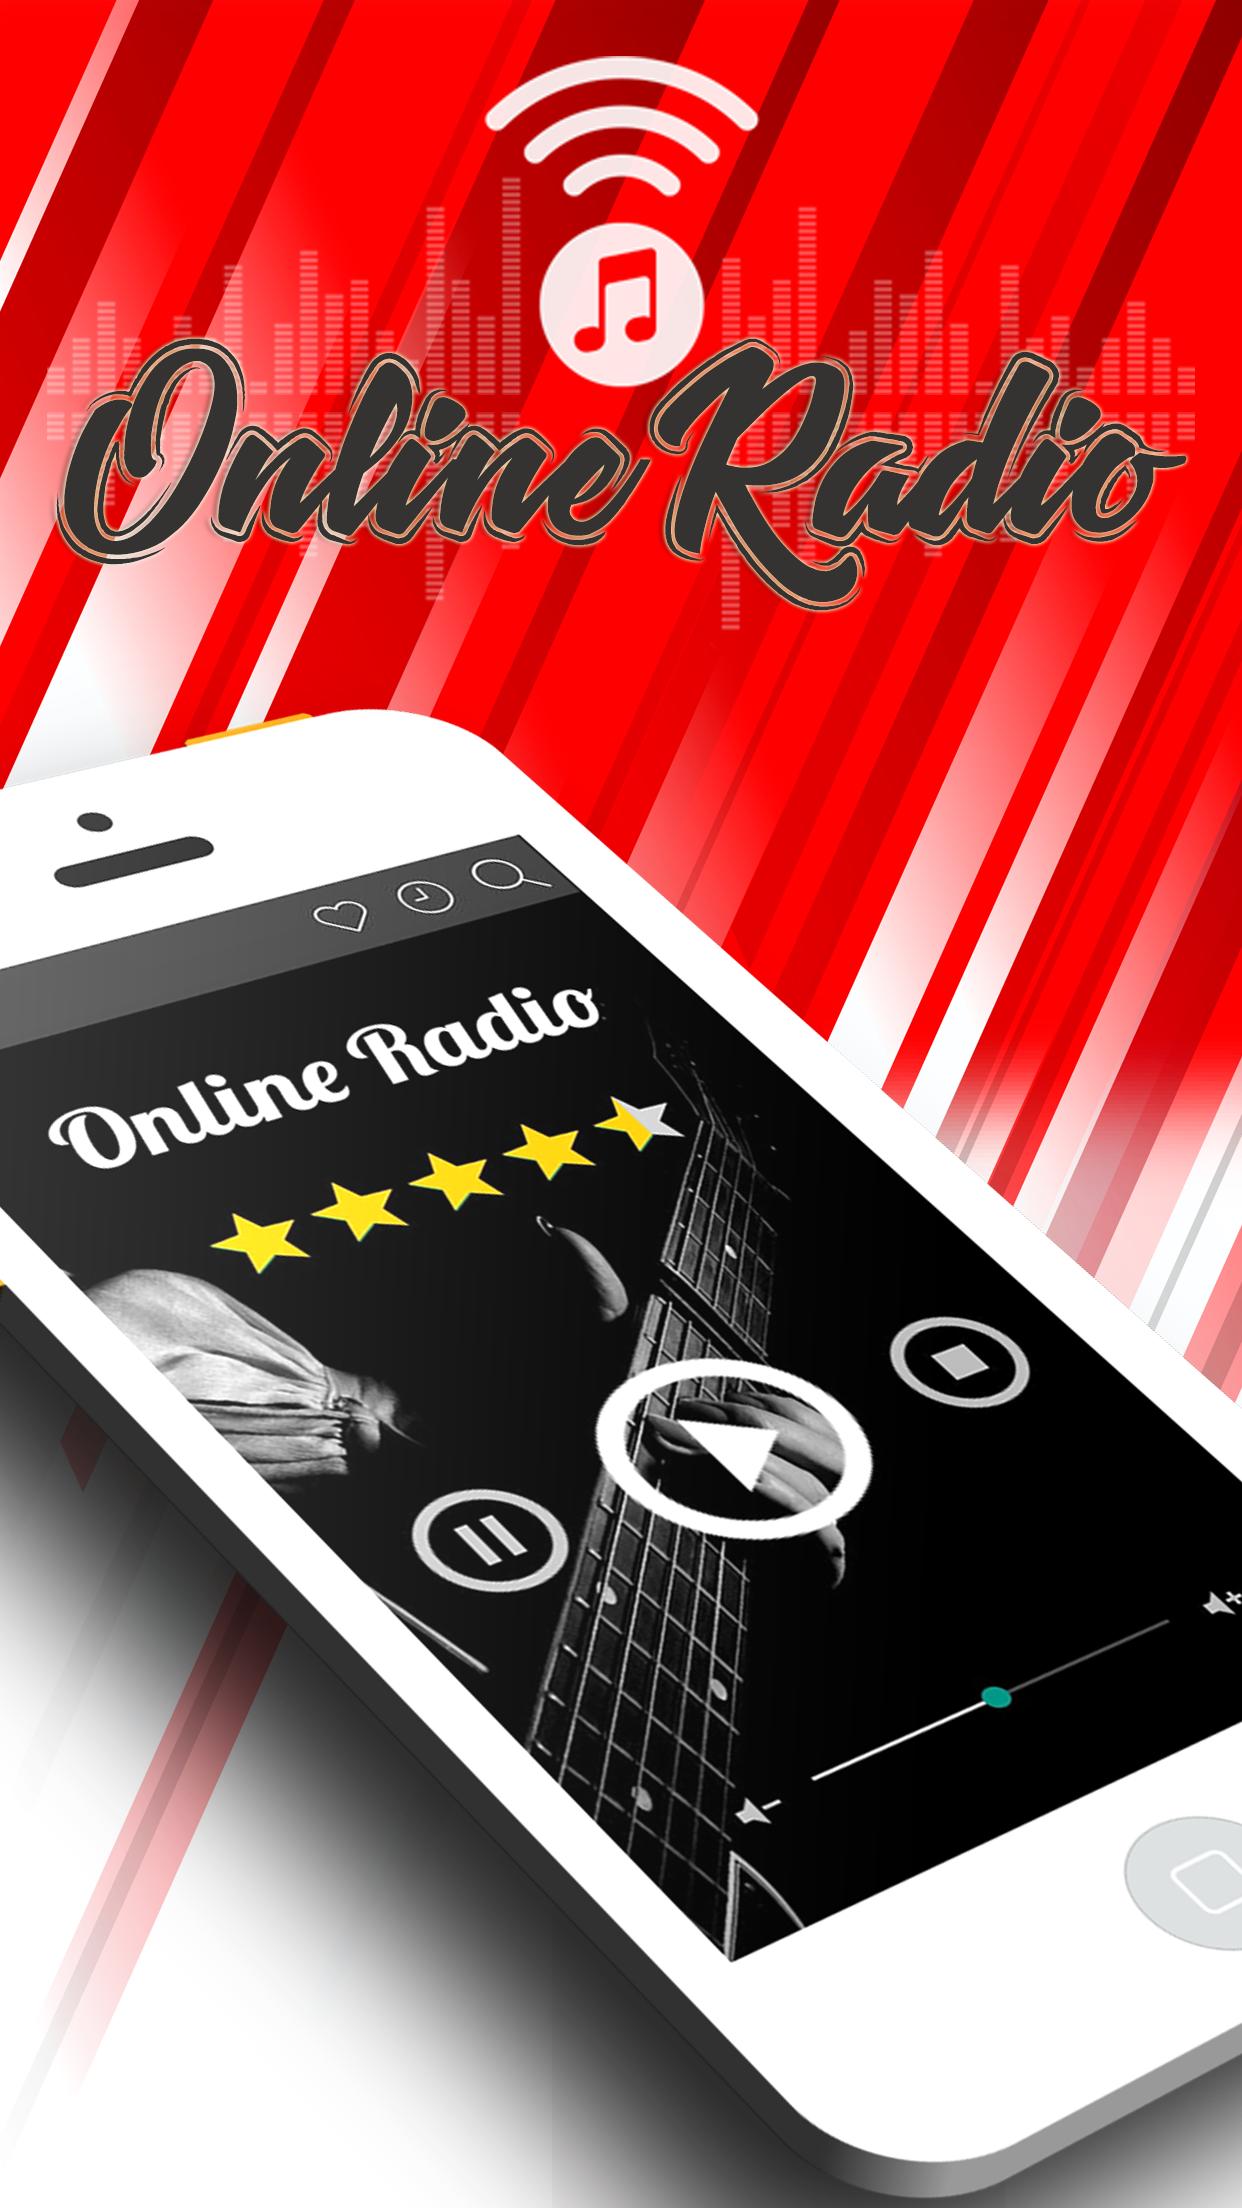 ORF Radio Salzburg App AT Kostenlos Radio Online for Android - APK Download